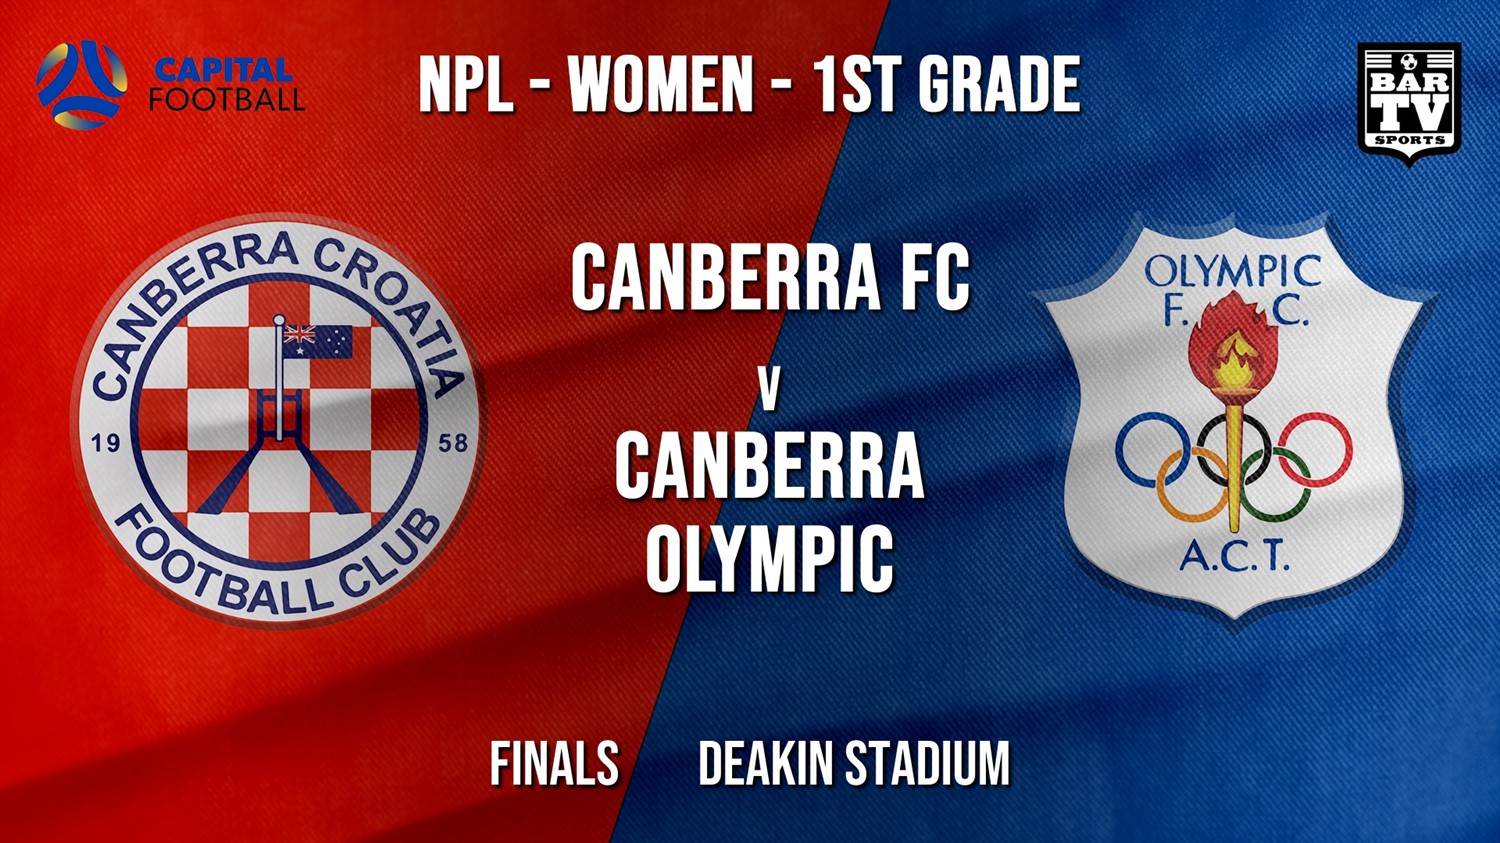 NPL Women - 1st Grade - Capital Football Finals Finals - Canberra FC (women) v Canberra Olympic FC (women) Minigame Slate Image